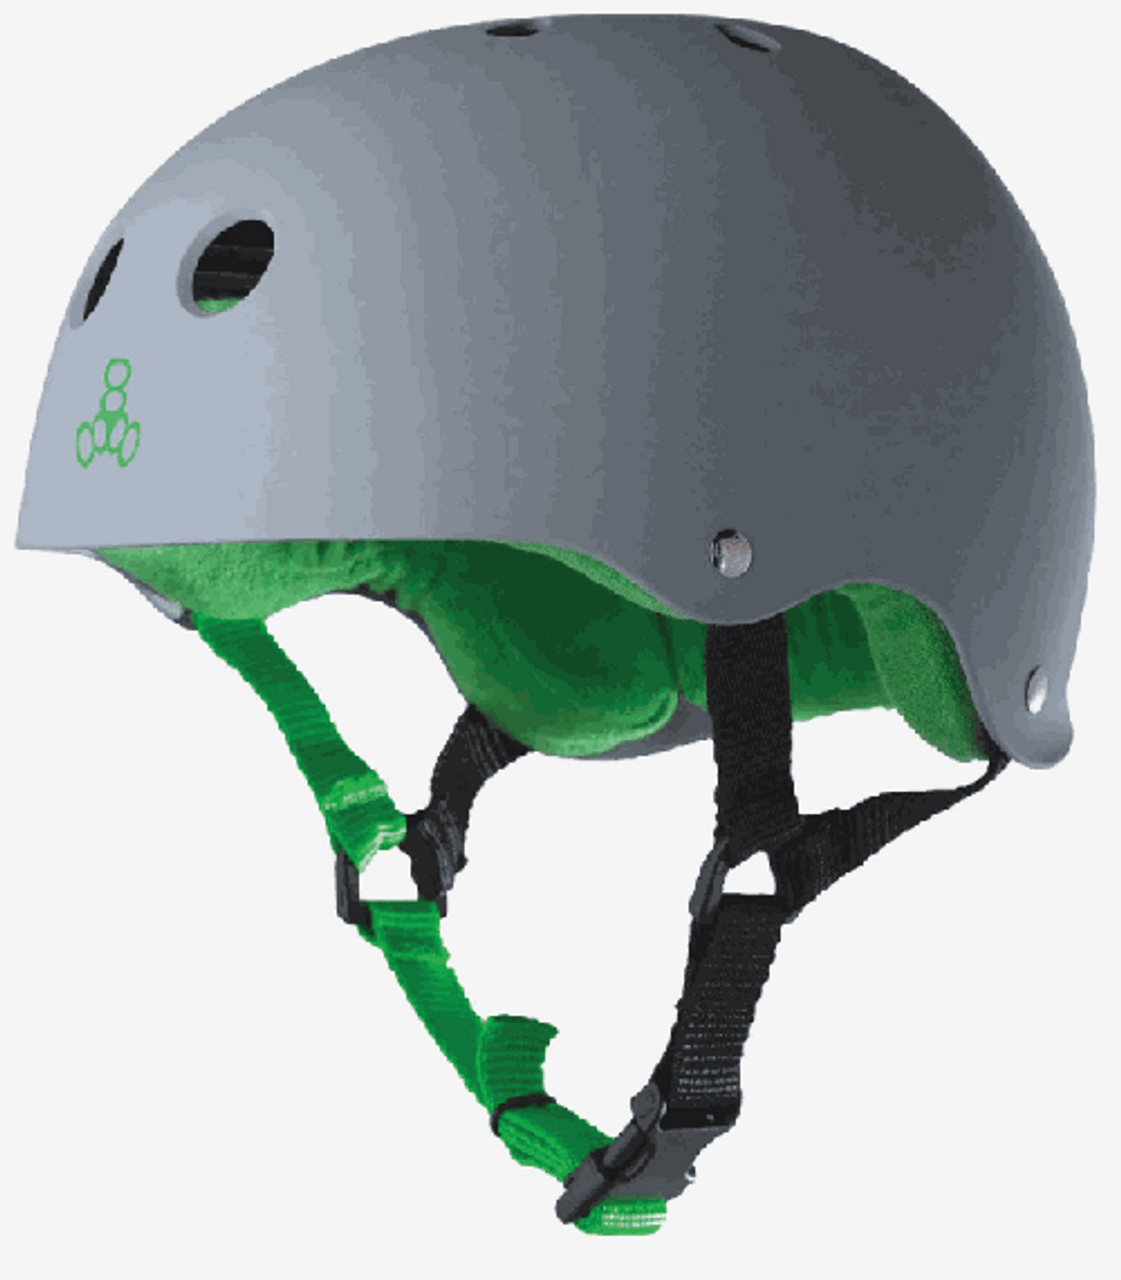 888 Helmet Carbon Green LG